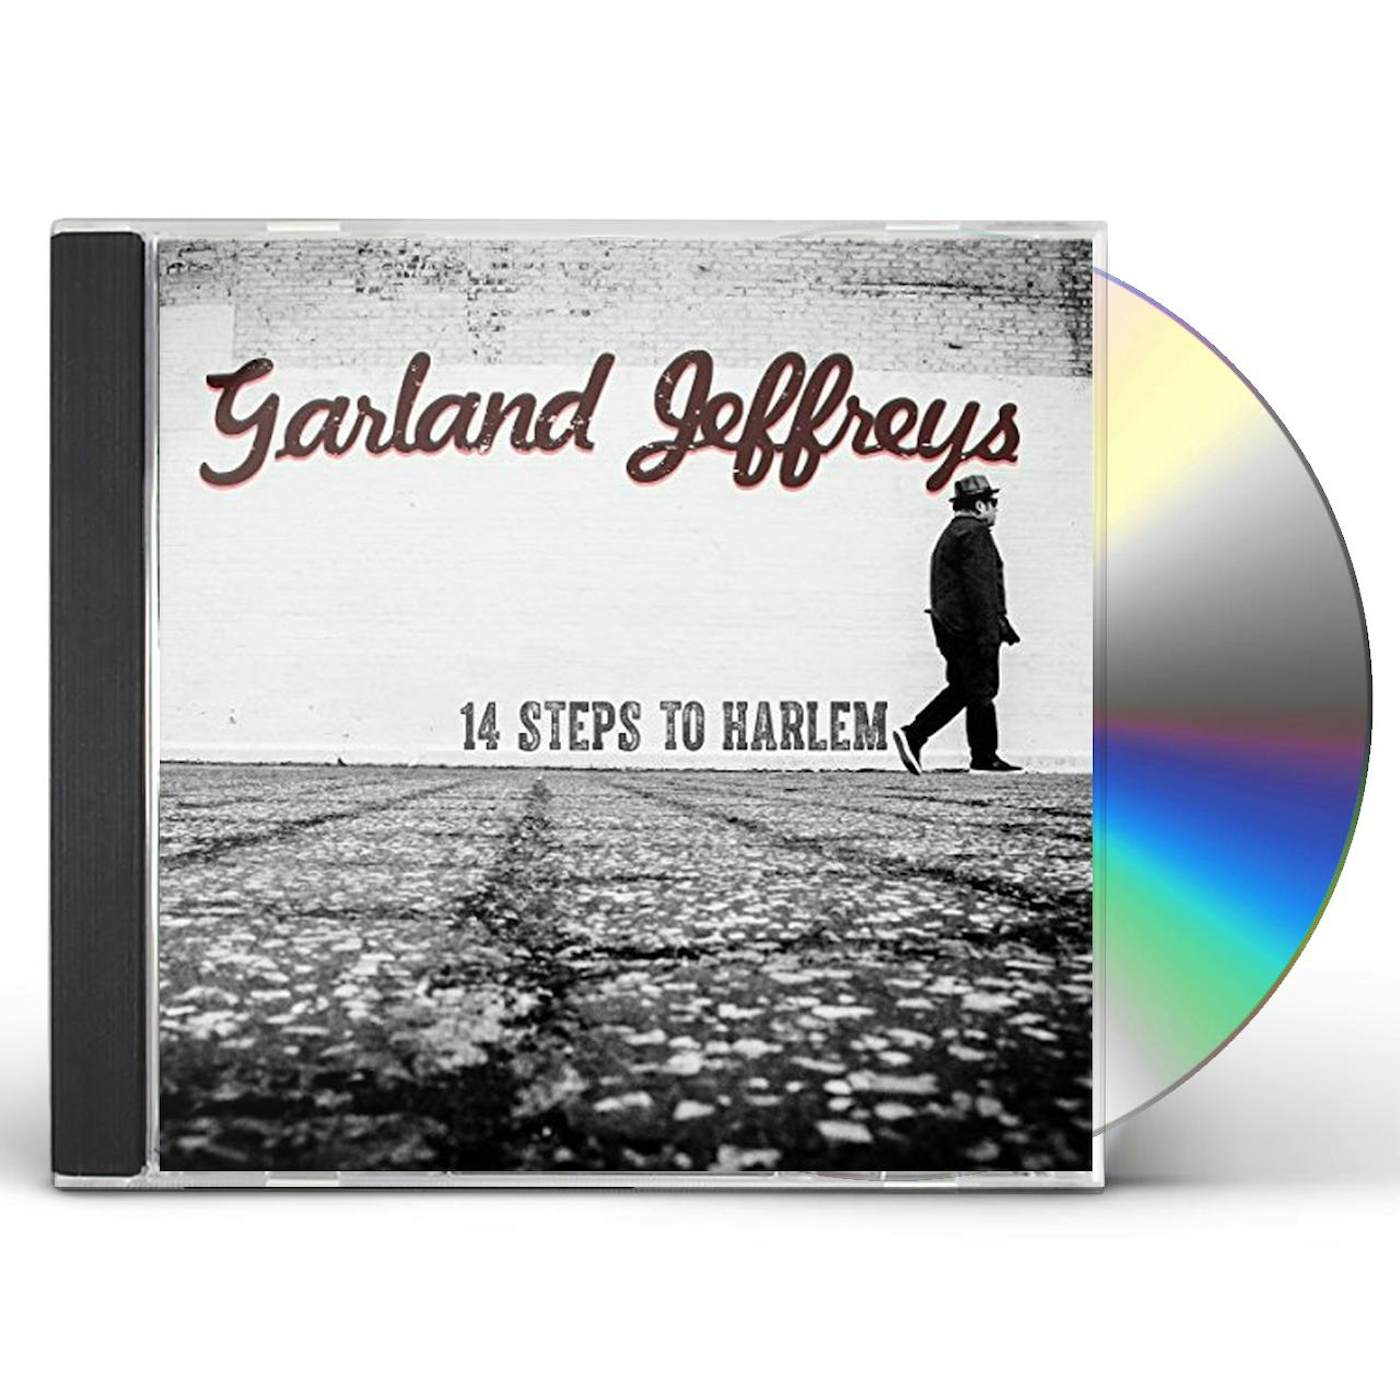 Garland Jeffreys 14 STEPS TO HARLEM CD